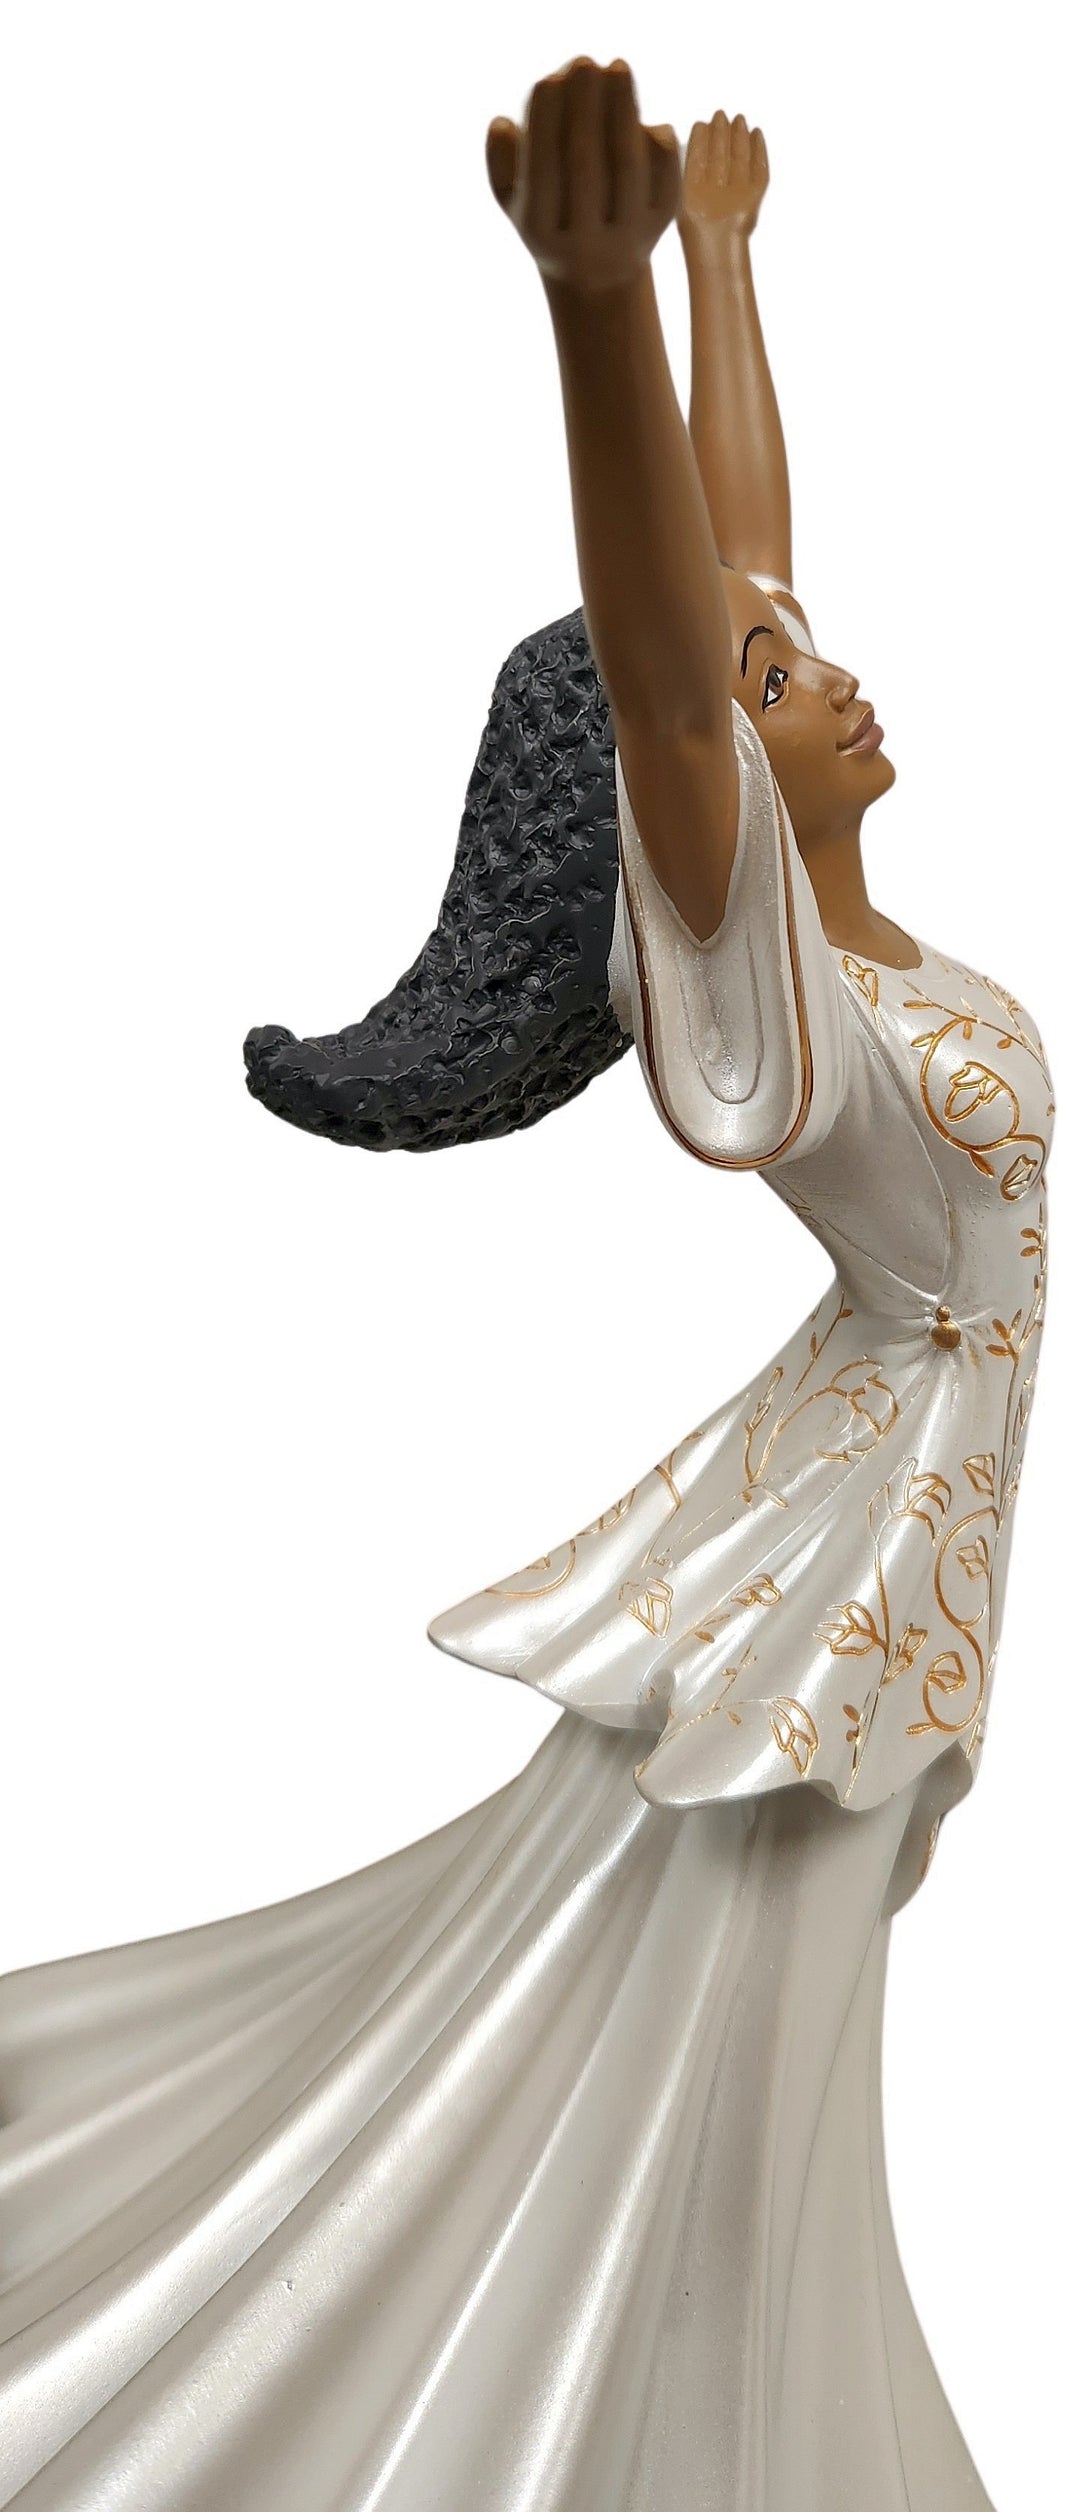 Joie: African American Praise Dancer Figurine (Side Detail)